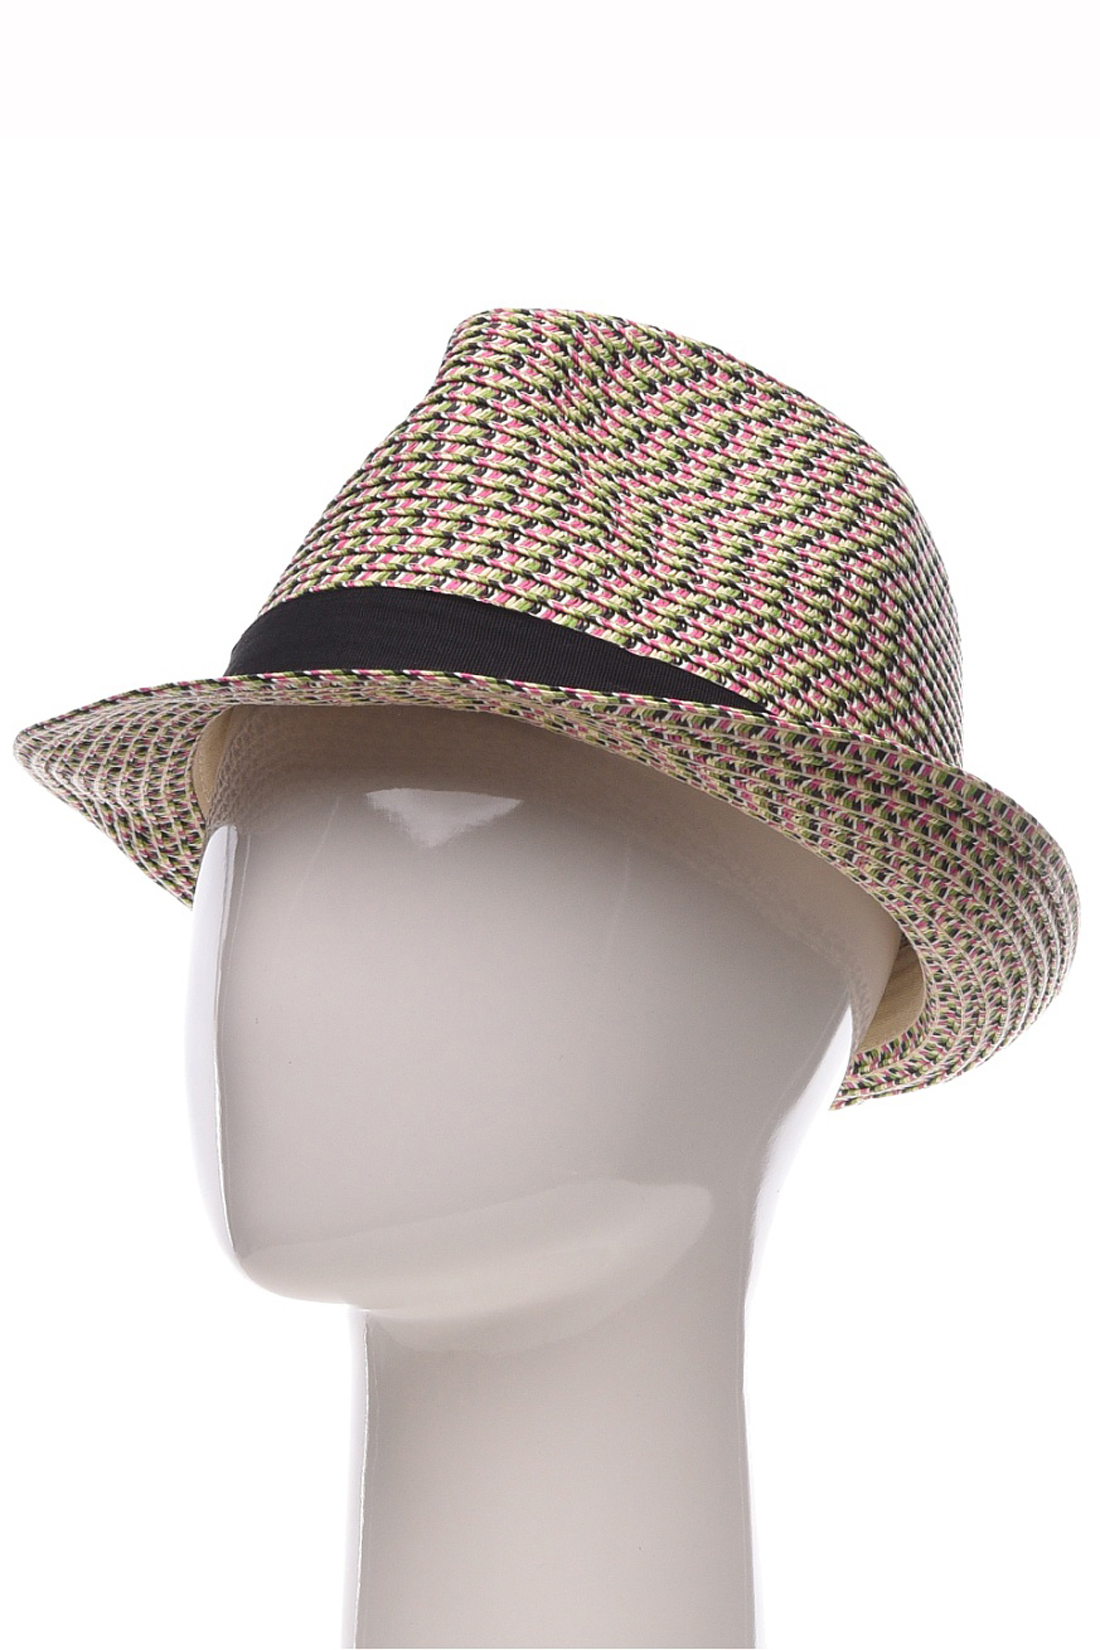 Шляпа с разноцветным плетением (арт. baon B849001), размер Б/р 58